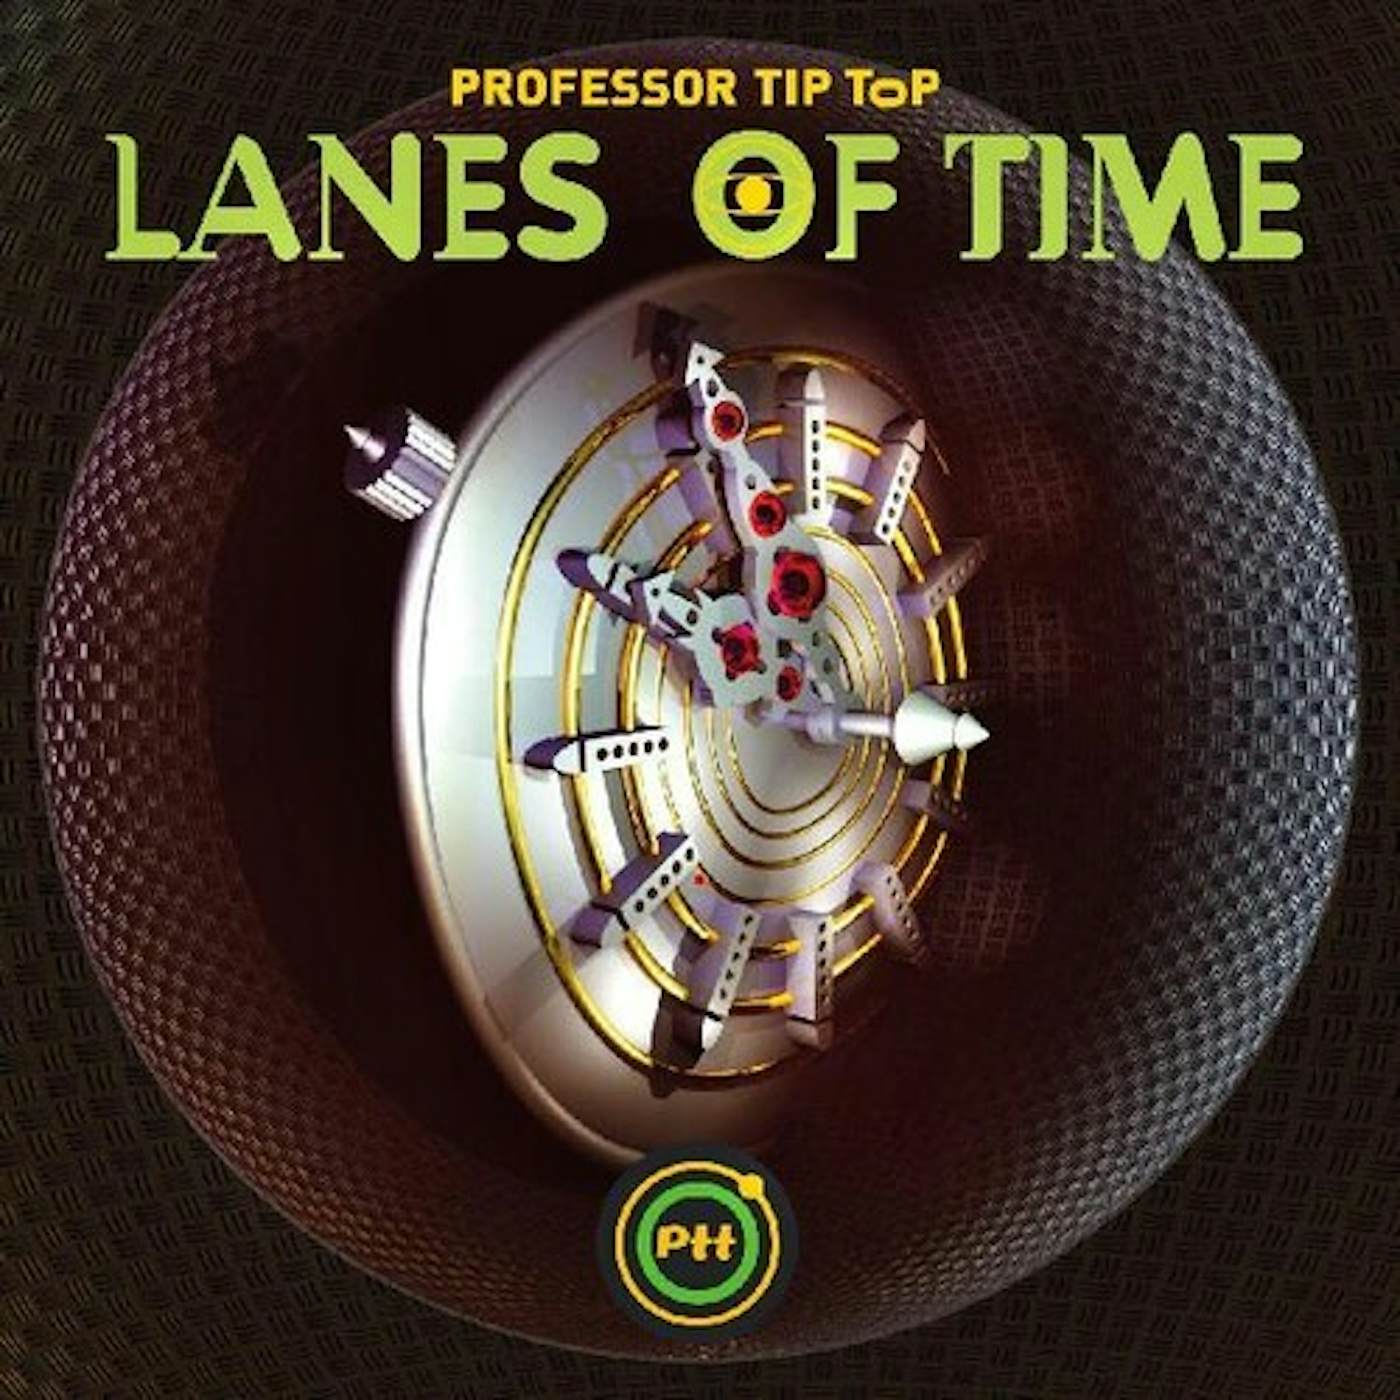 Professor Tip Top LANES OF TIME CD